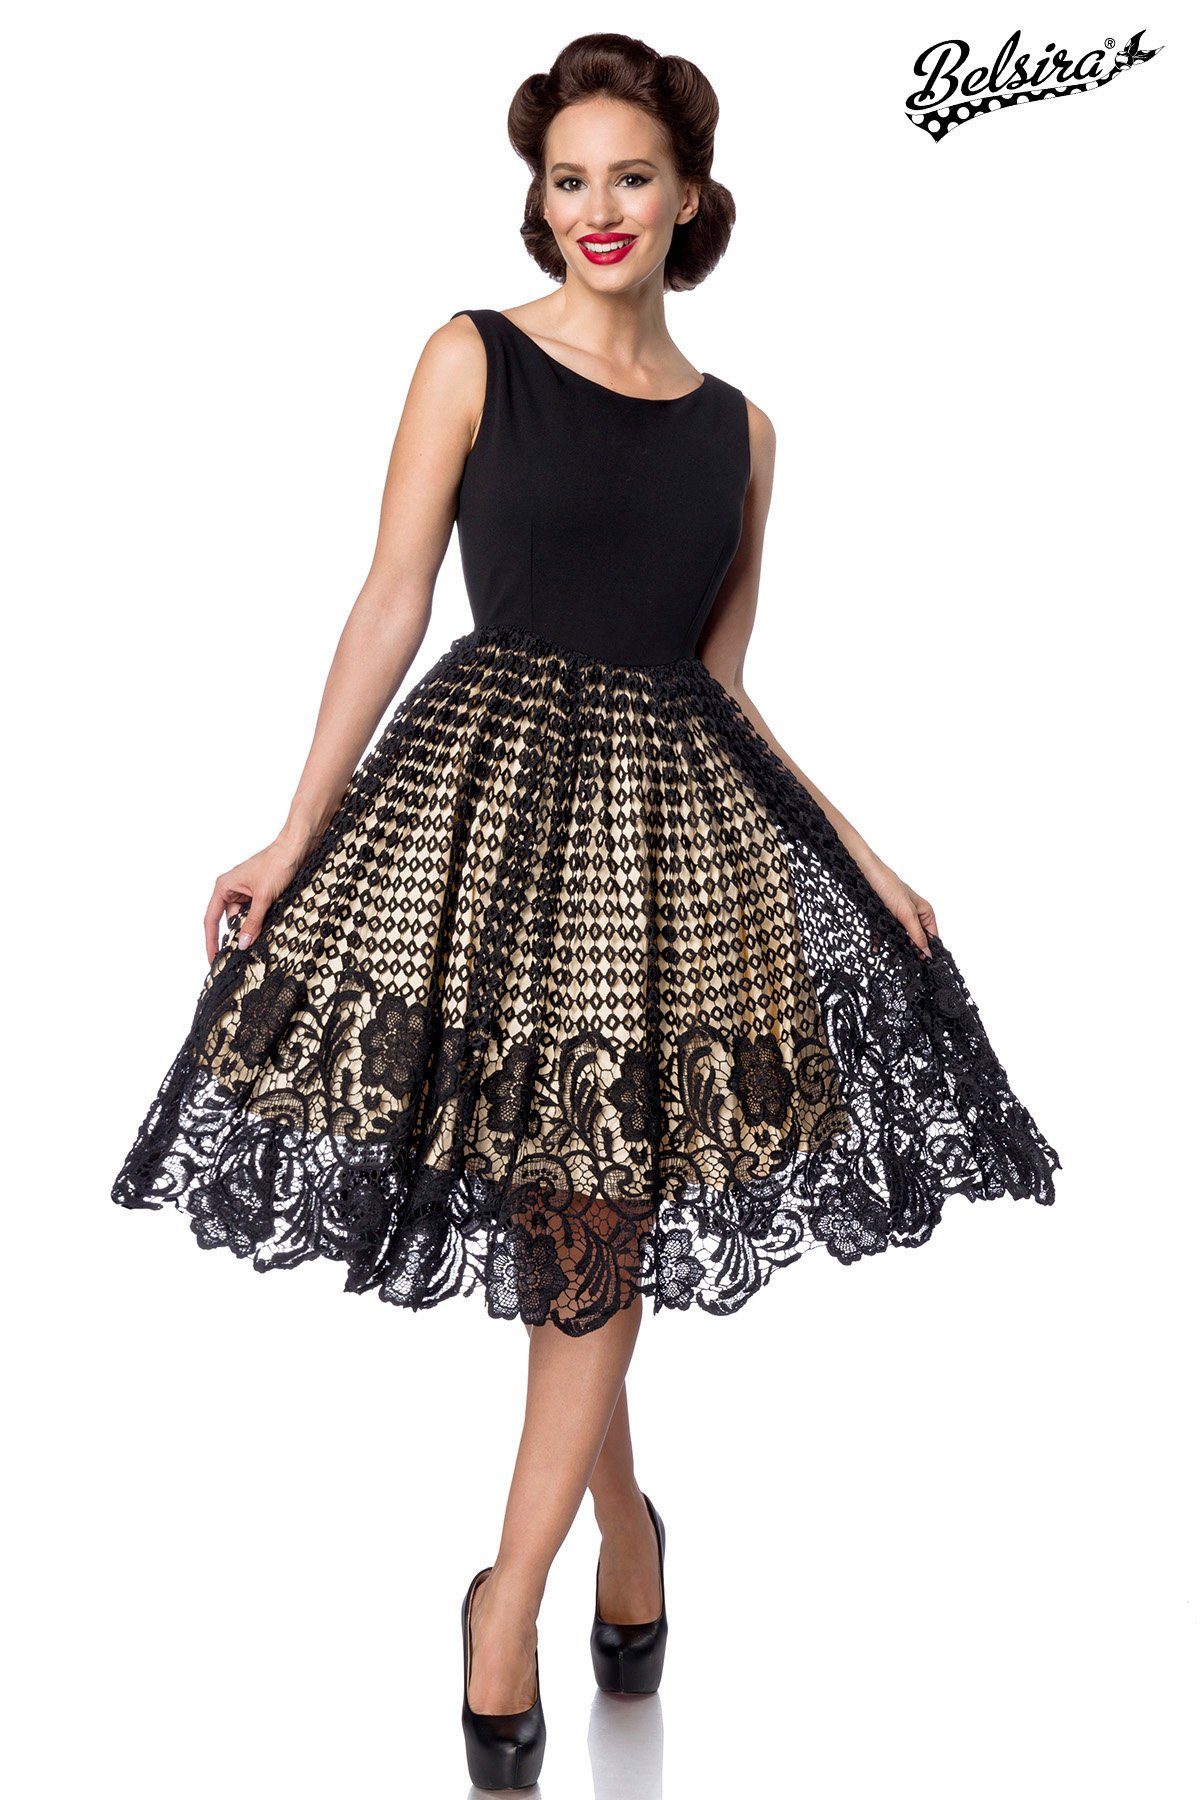 BELSIRA Spitzenkleid »Belsira Damen Retro Vintage Kleid Rockabilly  Sommerkleid Swingkleid Spitzenkleid 50s 60s Partykleid« online kaufen | OTTO